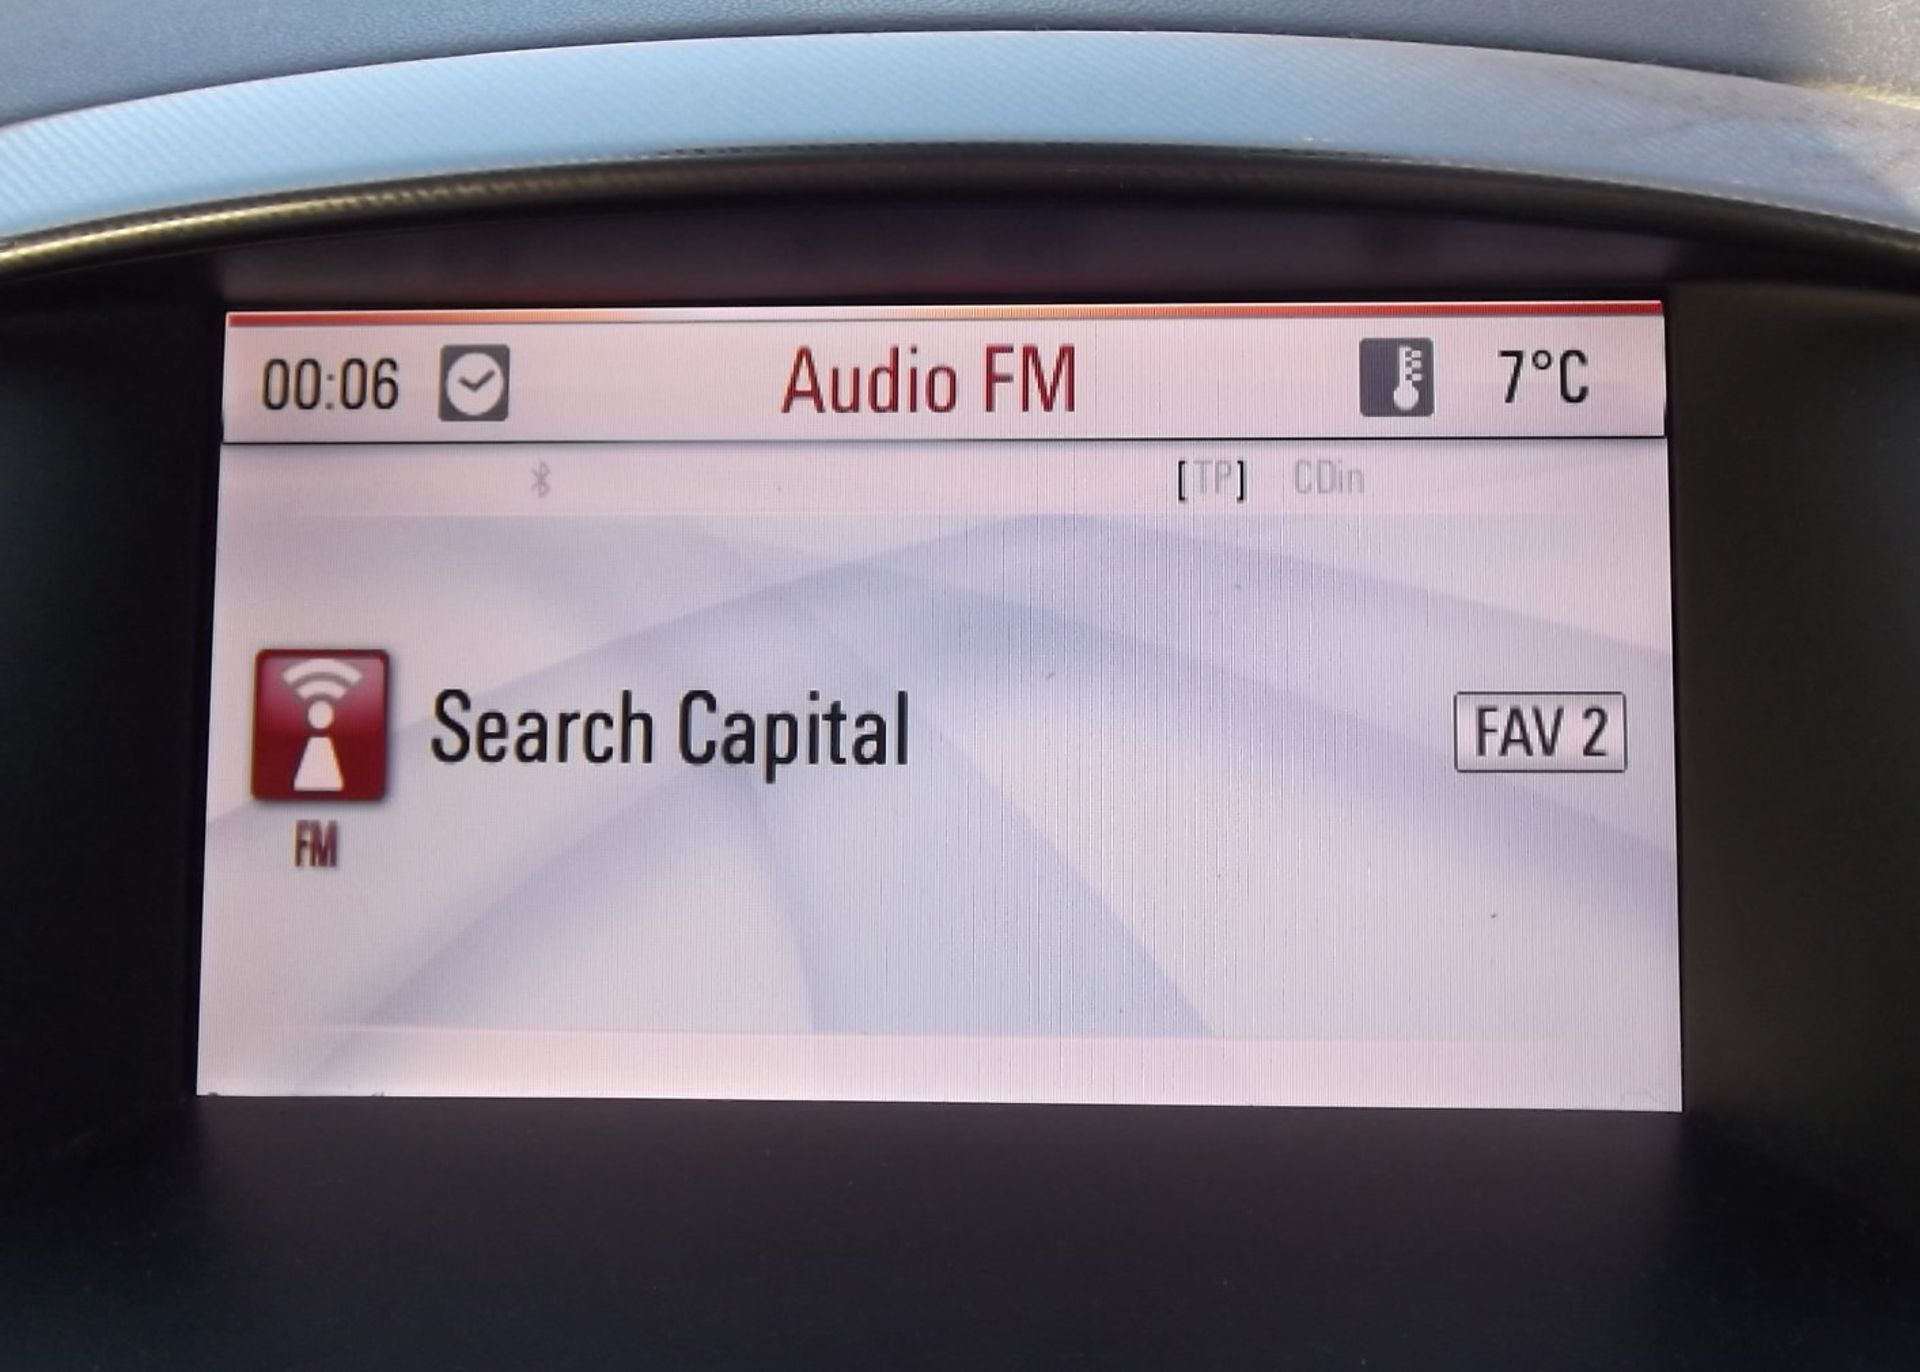 2011 Vauxhall Astra SE 1.6 Automatic 5 Door Hatchback - 97,000 Miles - Sat Nav, Dab Radio, Bluetooth - Image 10 of 17